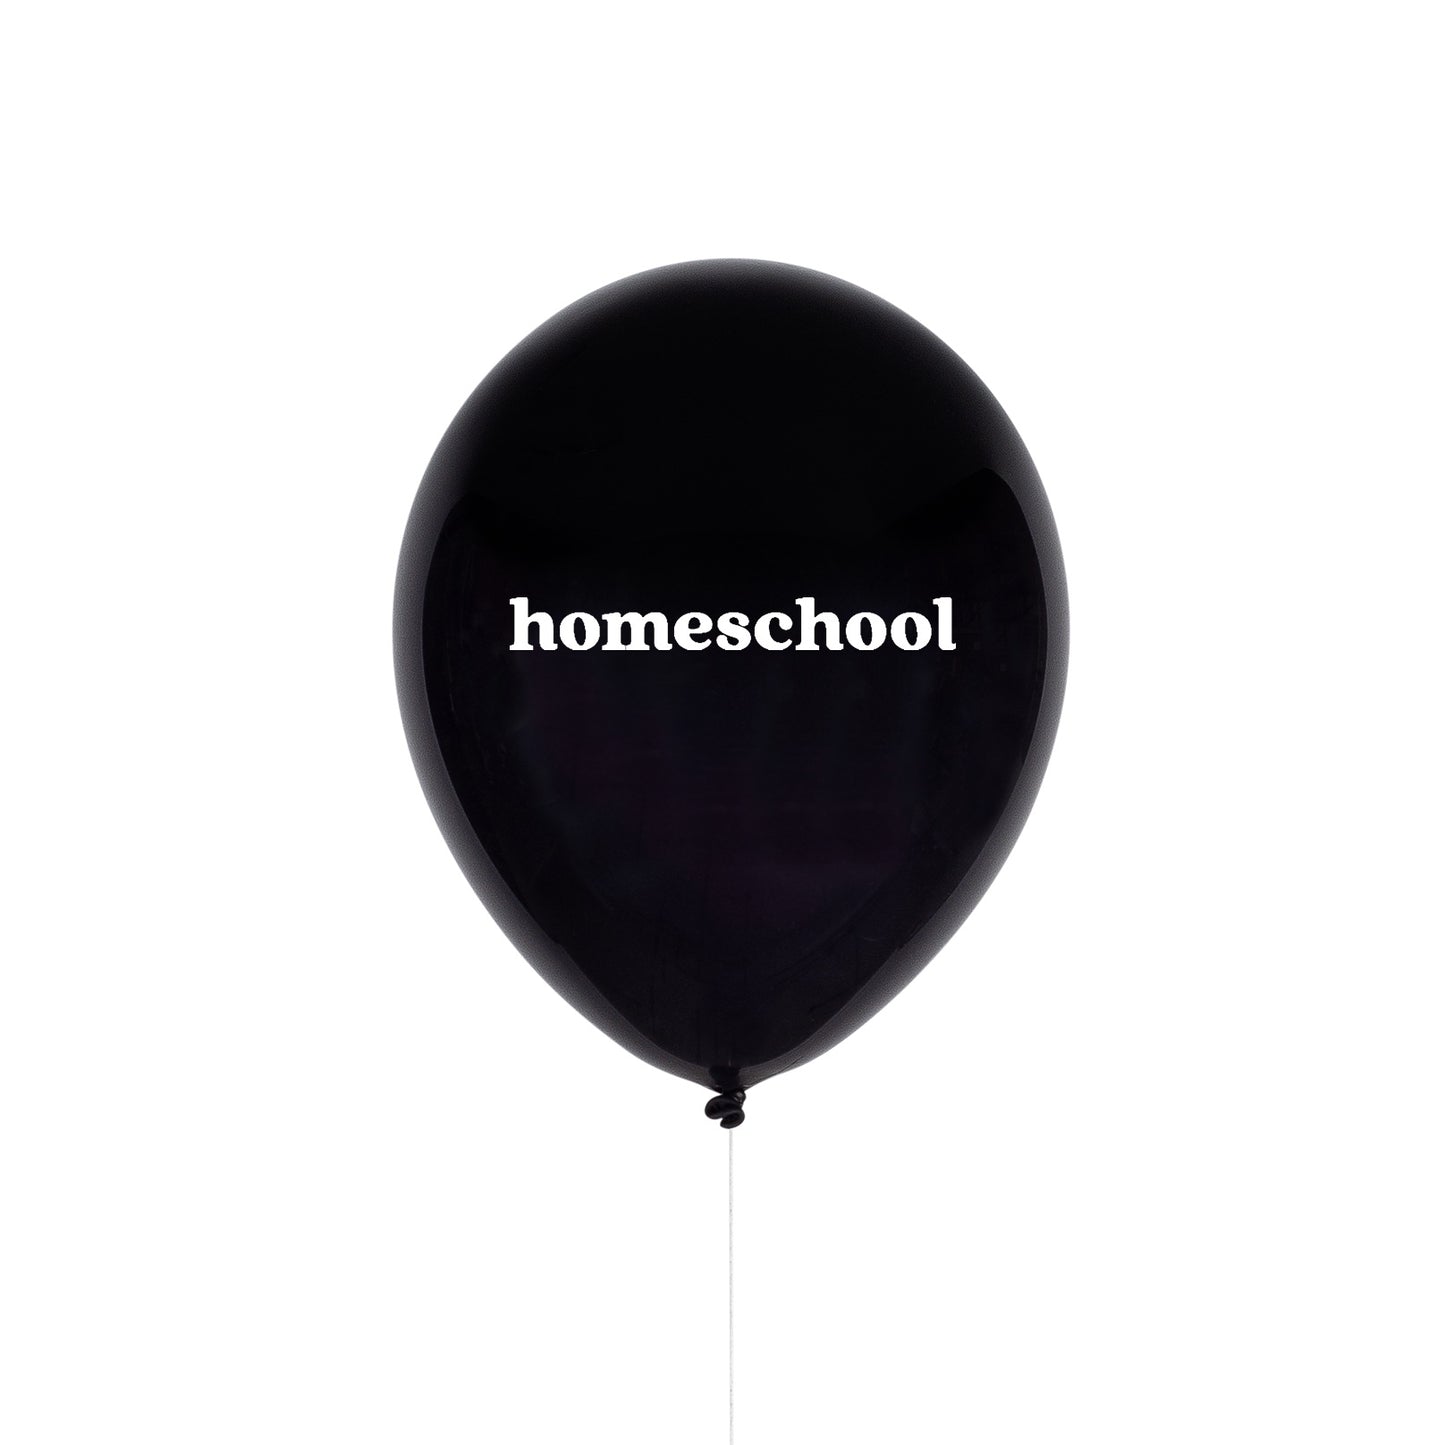 Homeschool Printed Balloon